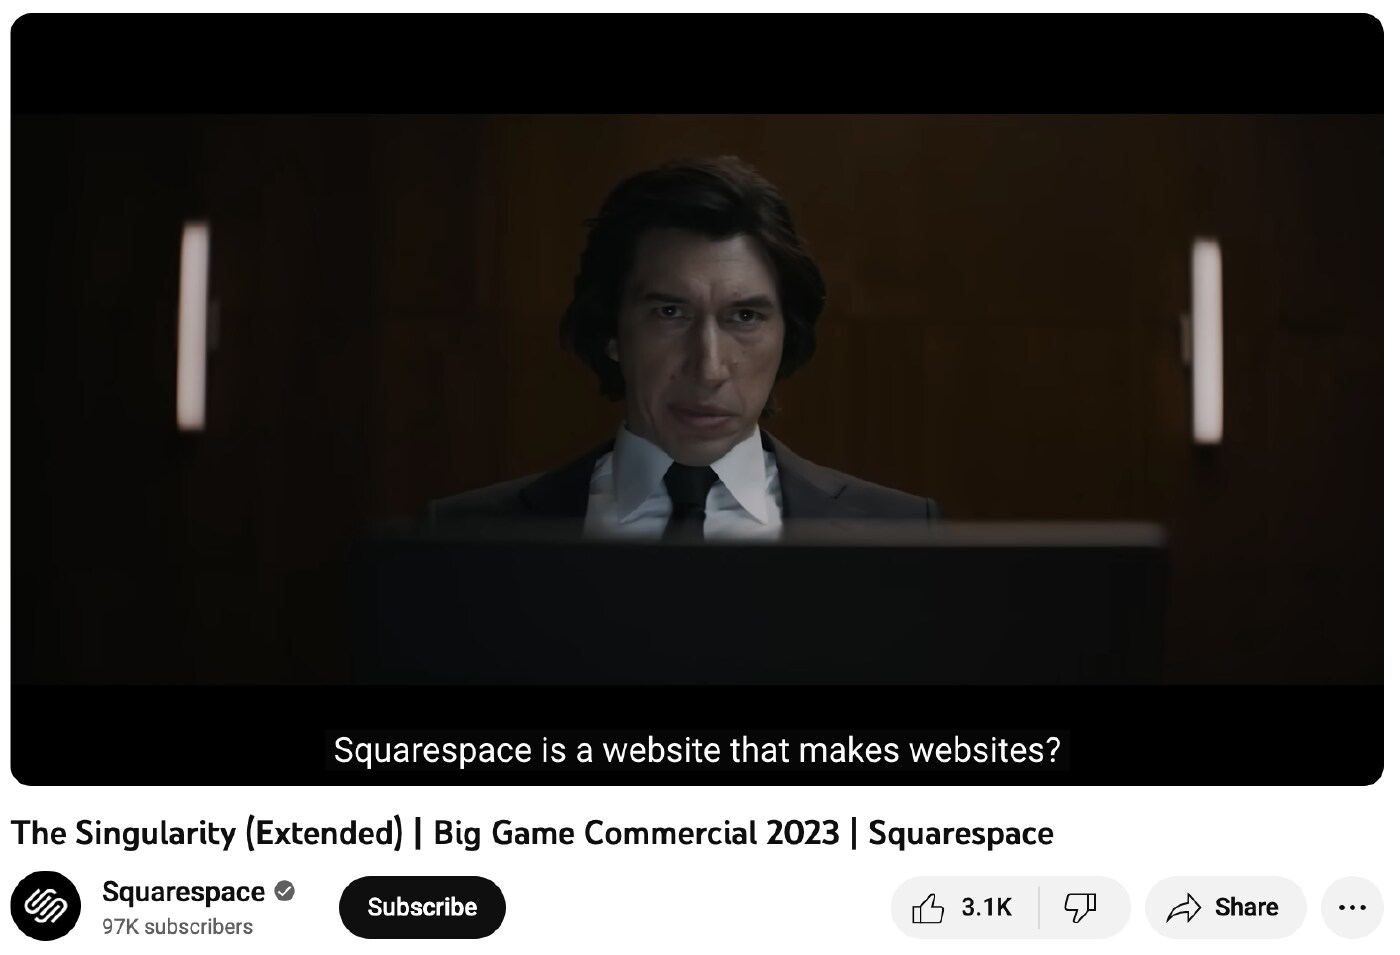 Squarespace’s Super Bowl ad 2023